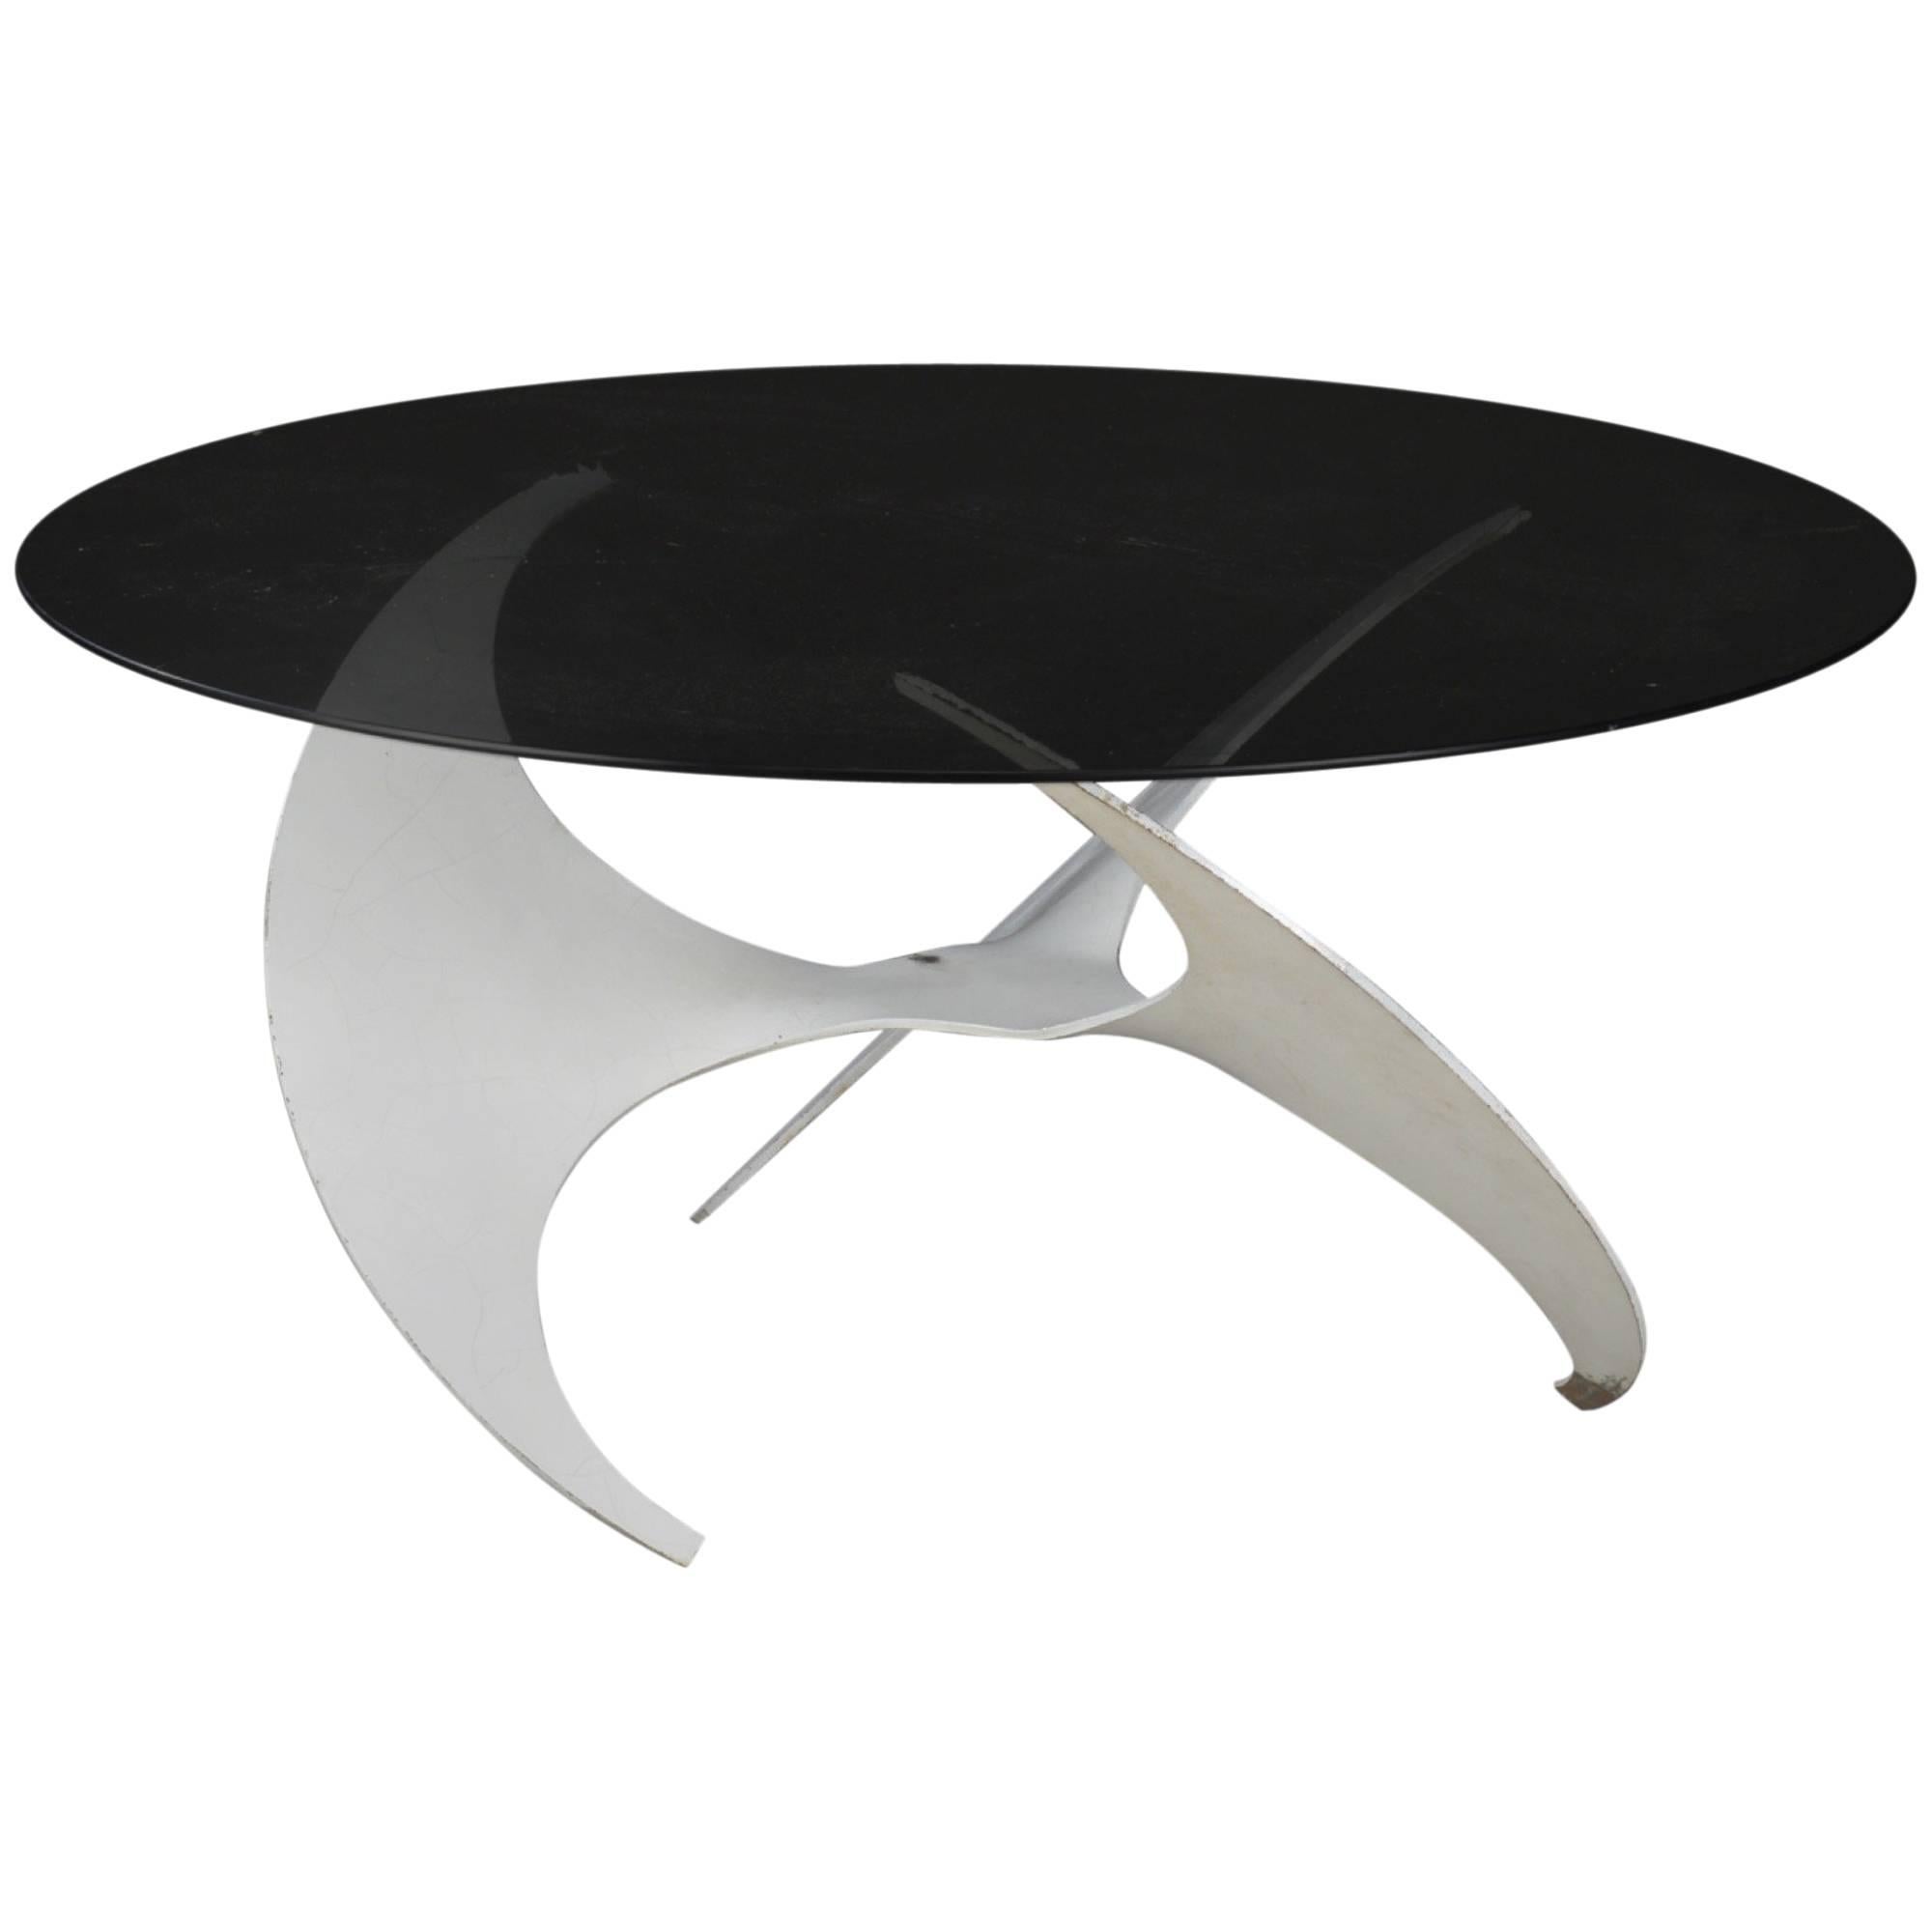 'Model Propeller' Coffee Table by Knut Hesterberg